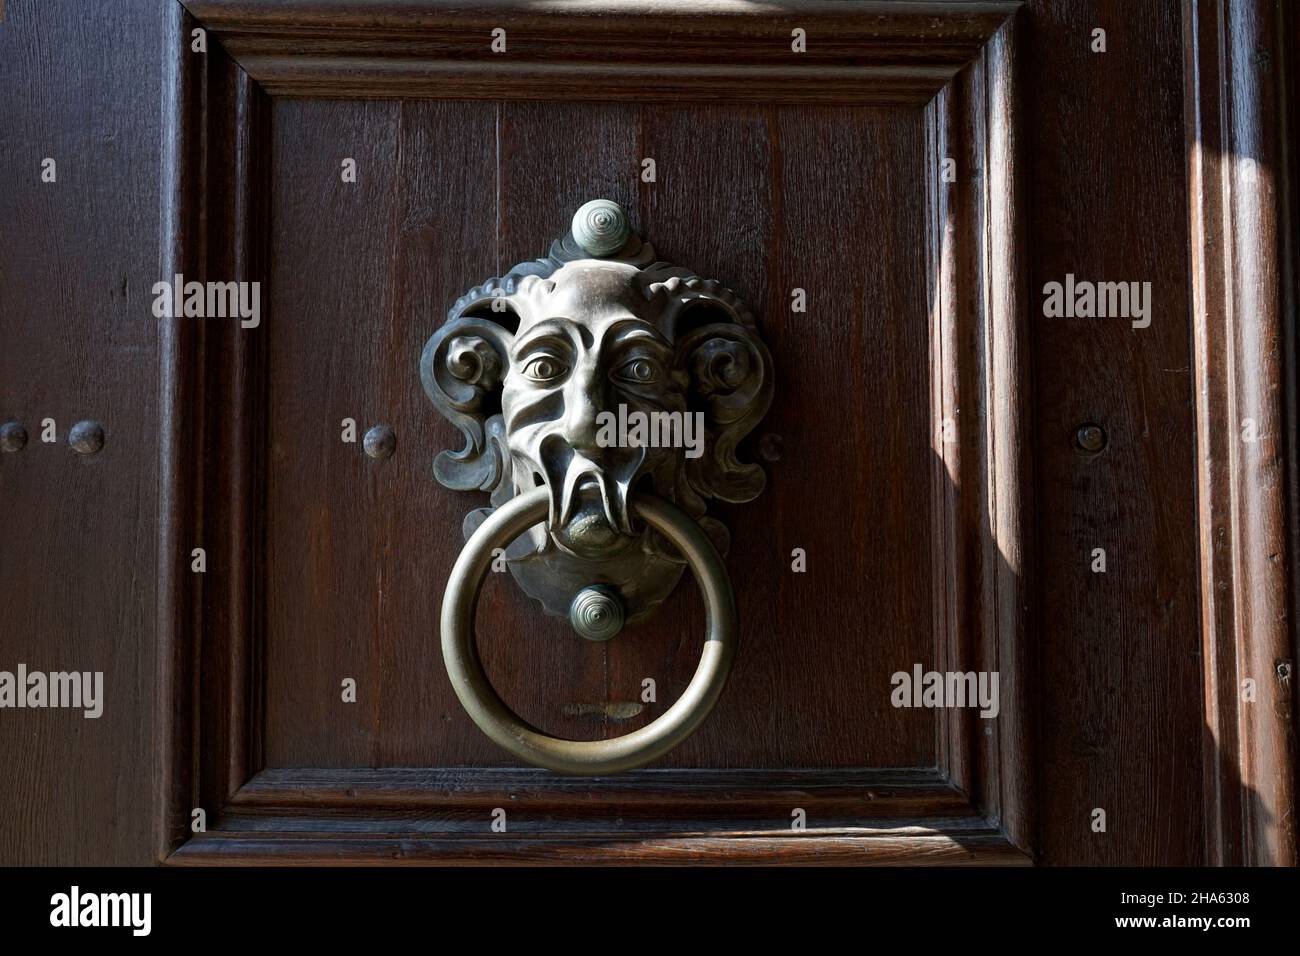 germany,bavaria,upper franconia,bamberg,old town,new residence,portal,historical door knob with ring,door knocker Stock Photo